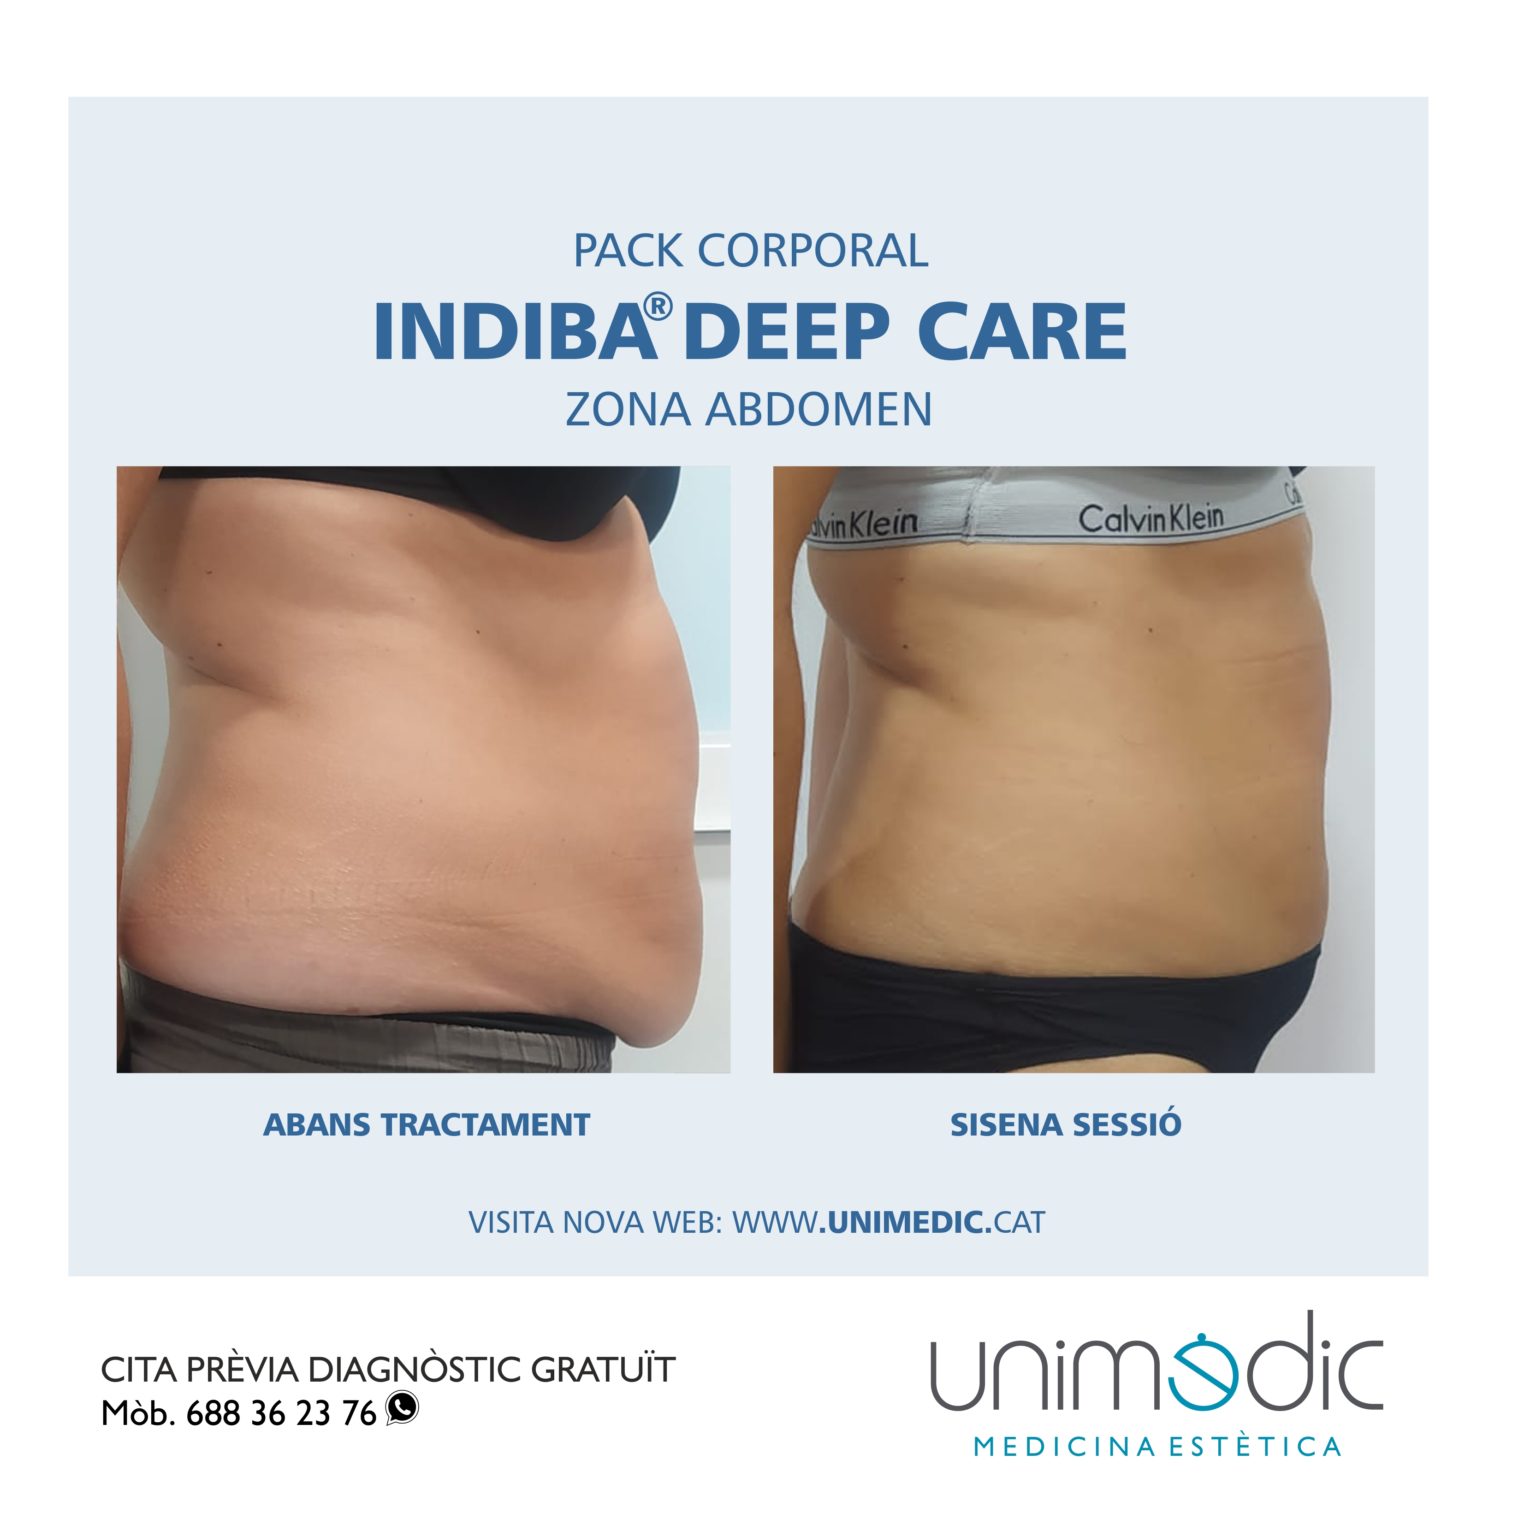 UNIMEDIC Indiba deep care_abdomen